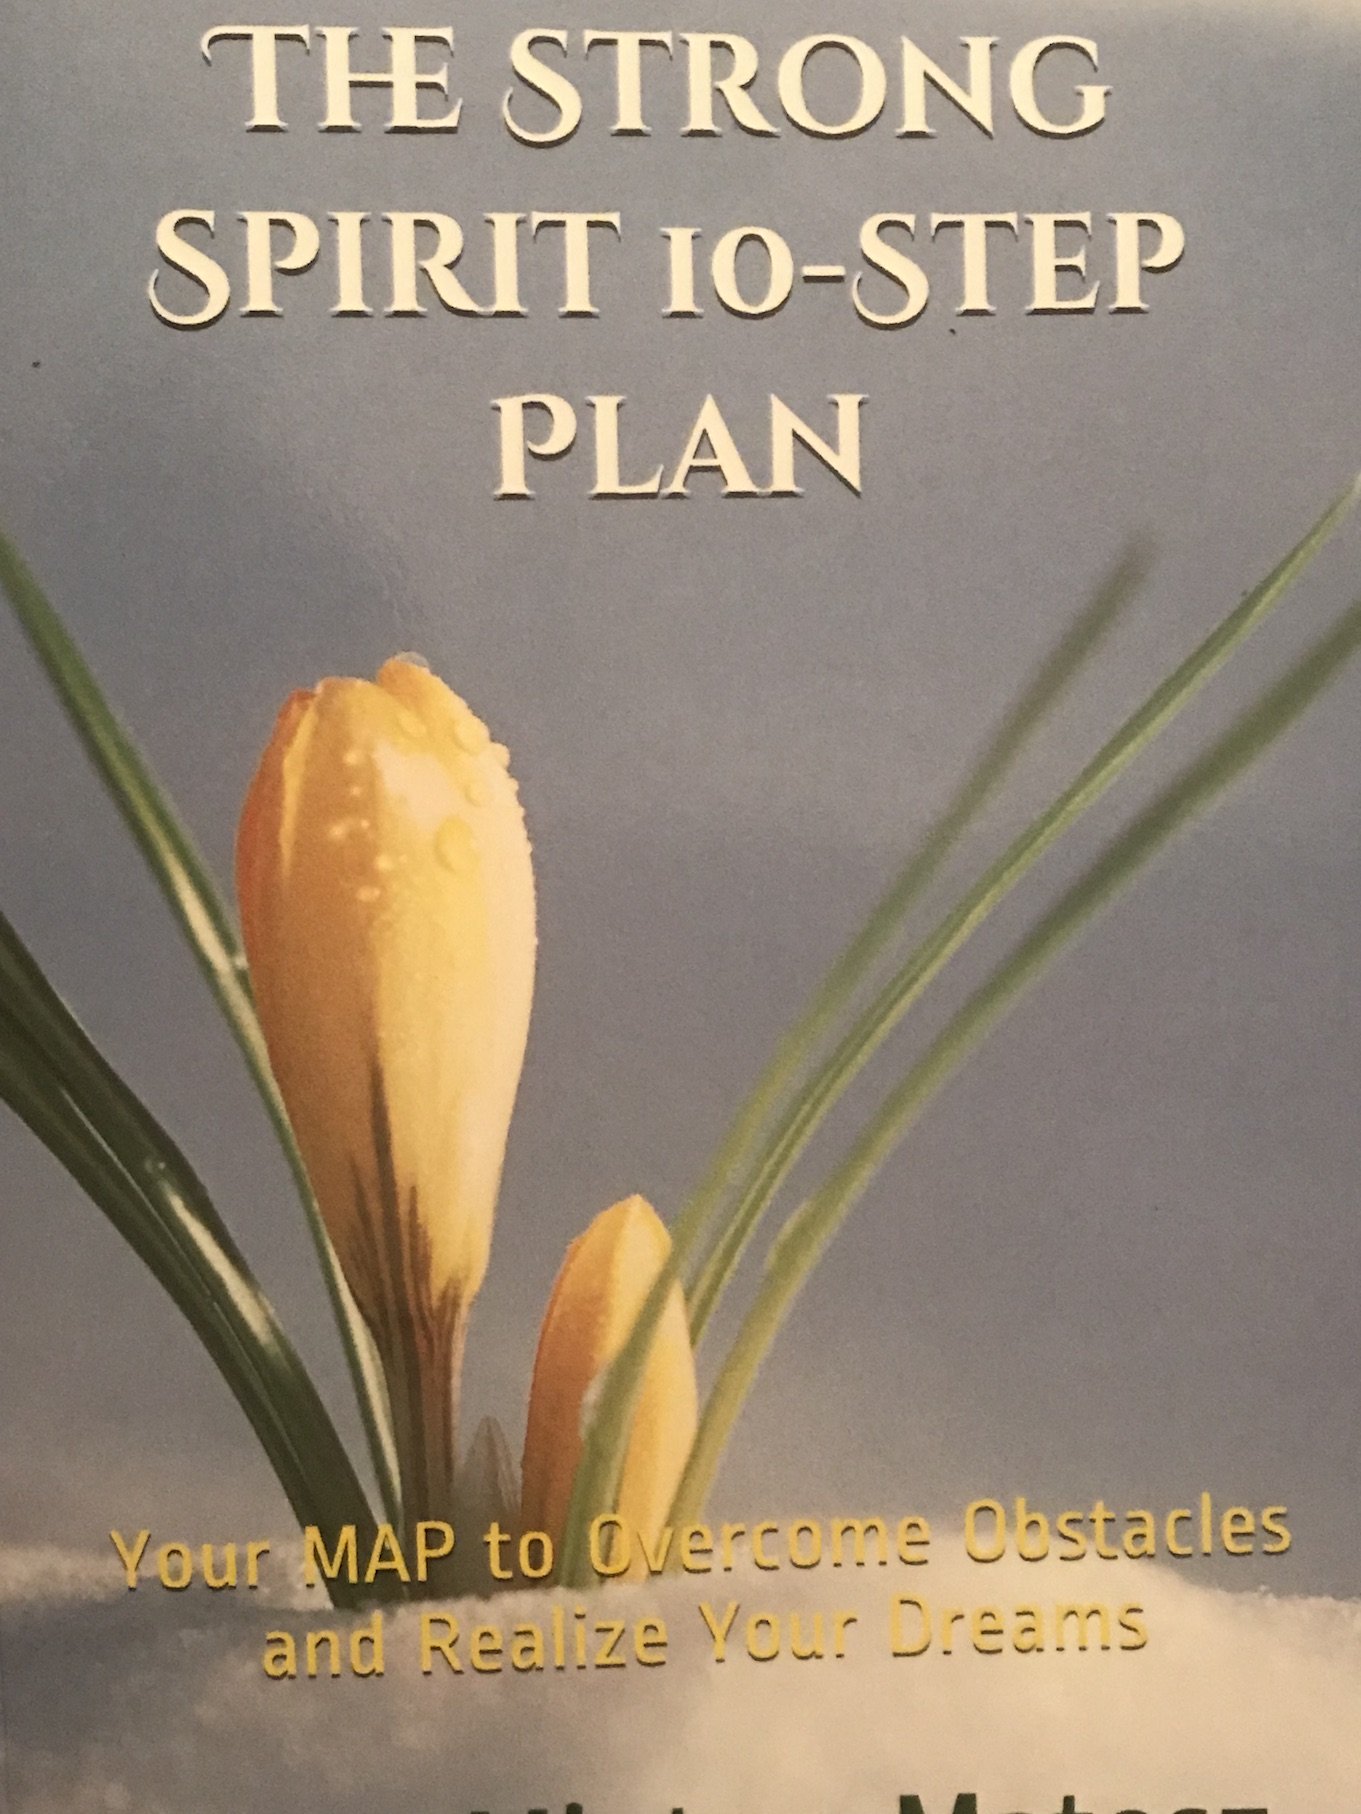 The Strong Spirit 10-Step Plan